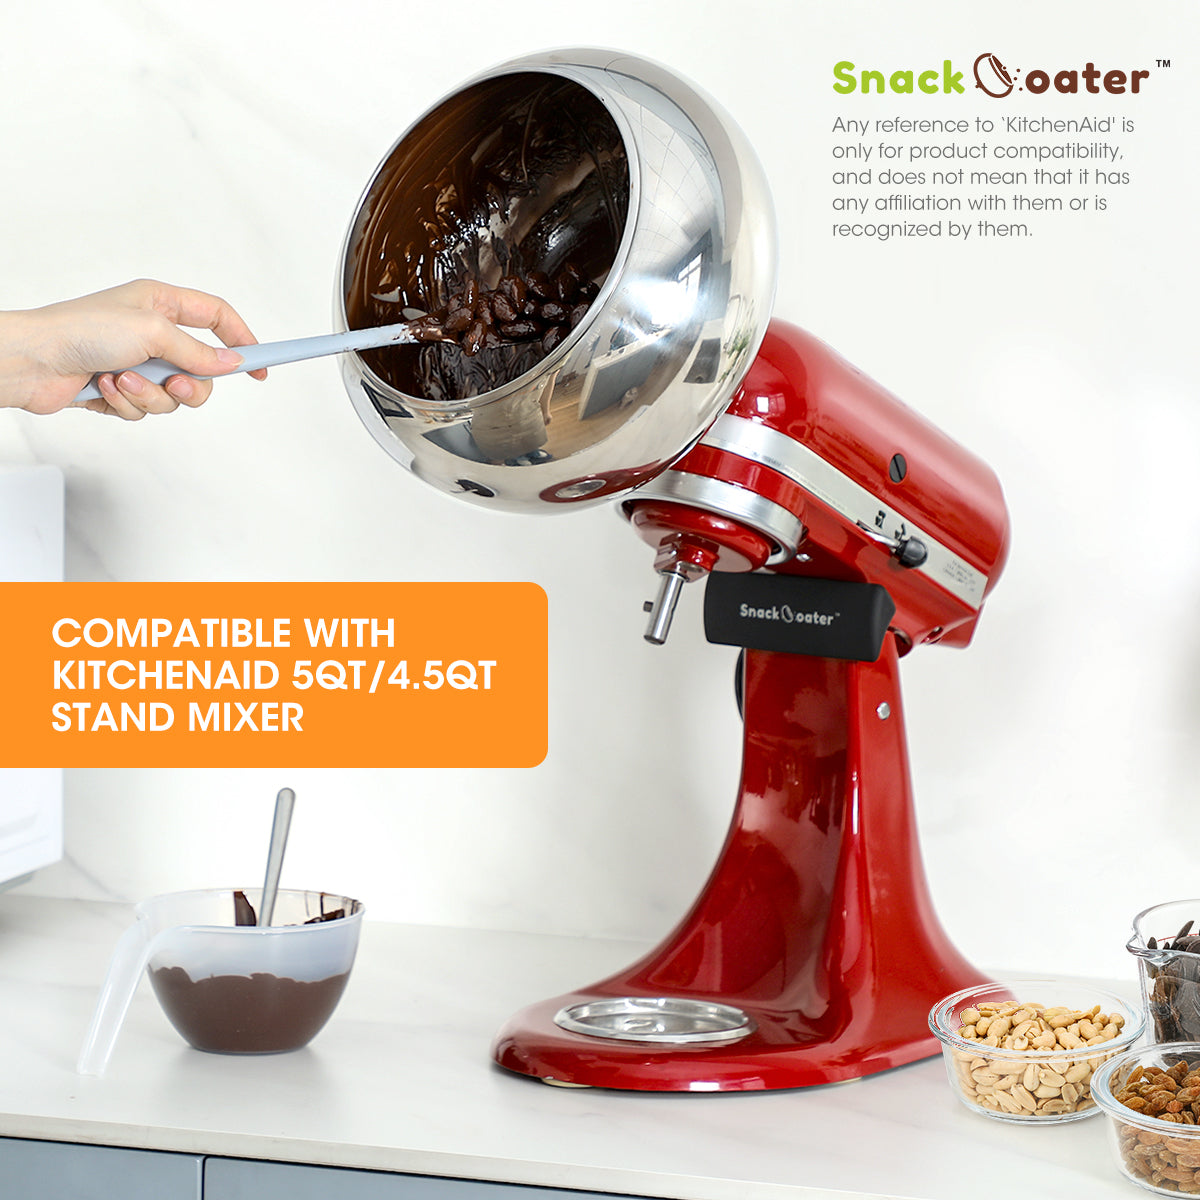 Snack coater compatible with Kitchenaid 5QT/4.5QT Stand Mixer.